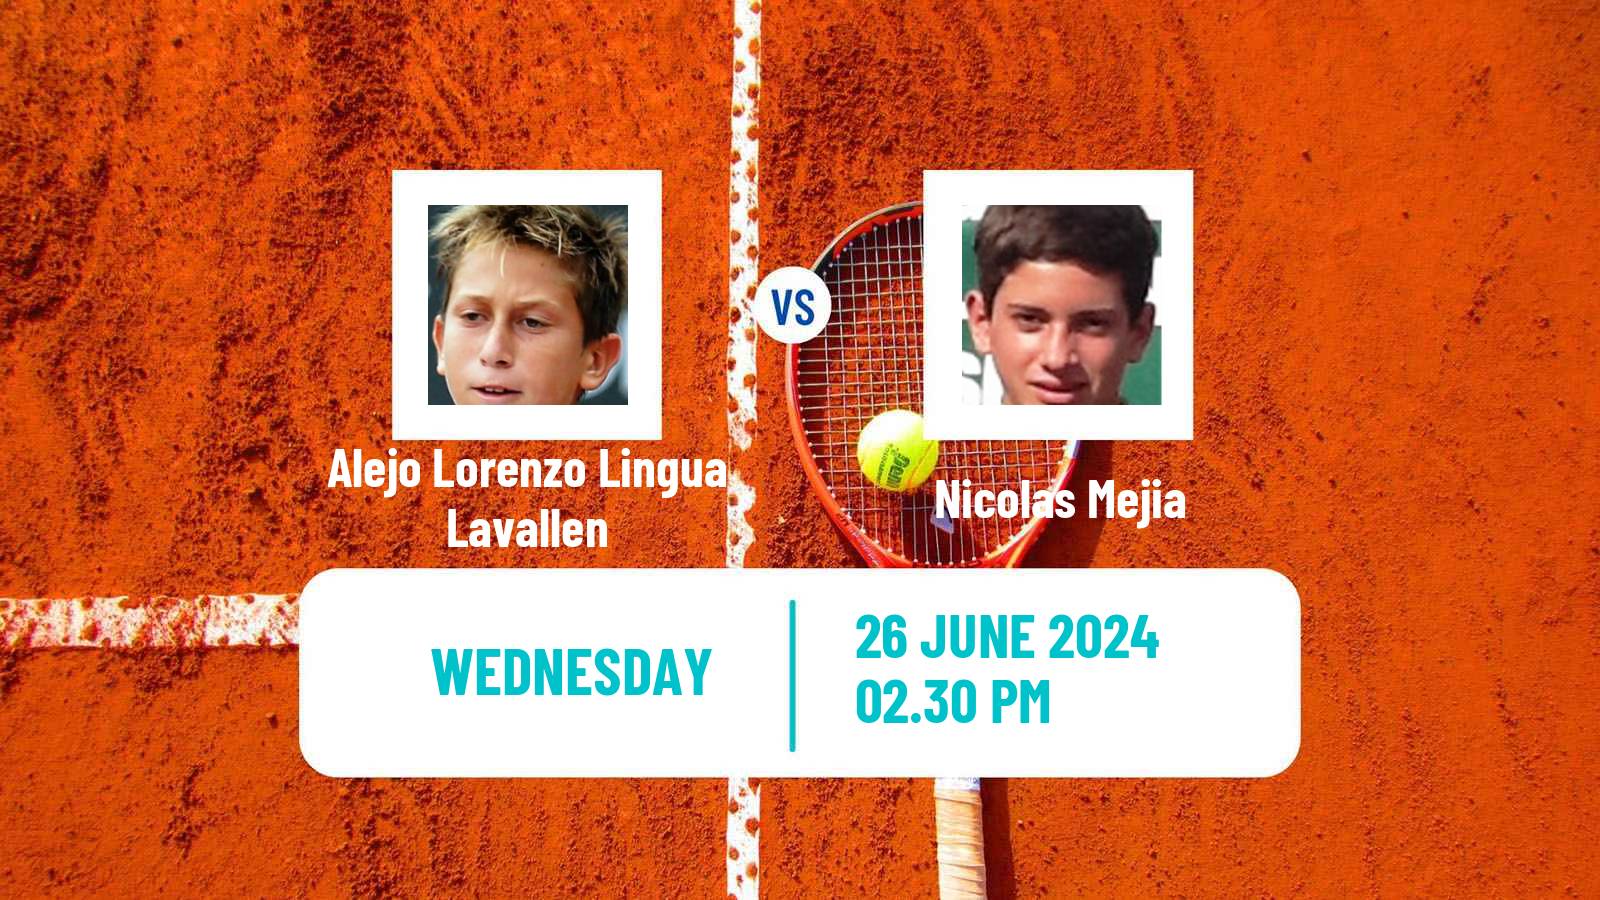 Tennis Ibague Challenger Men Alejo Lorenzo Lingua Lavallen - Nicolas Mejia